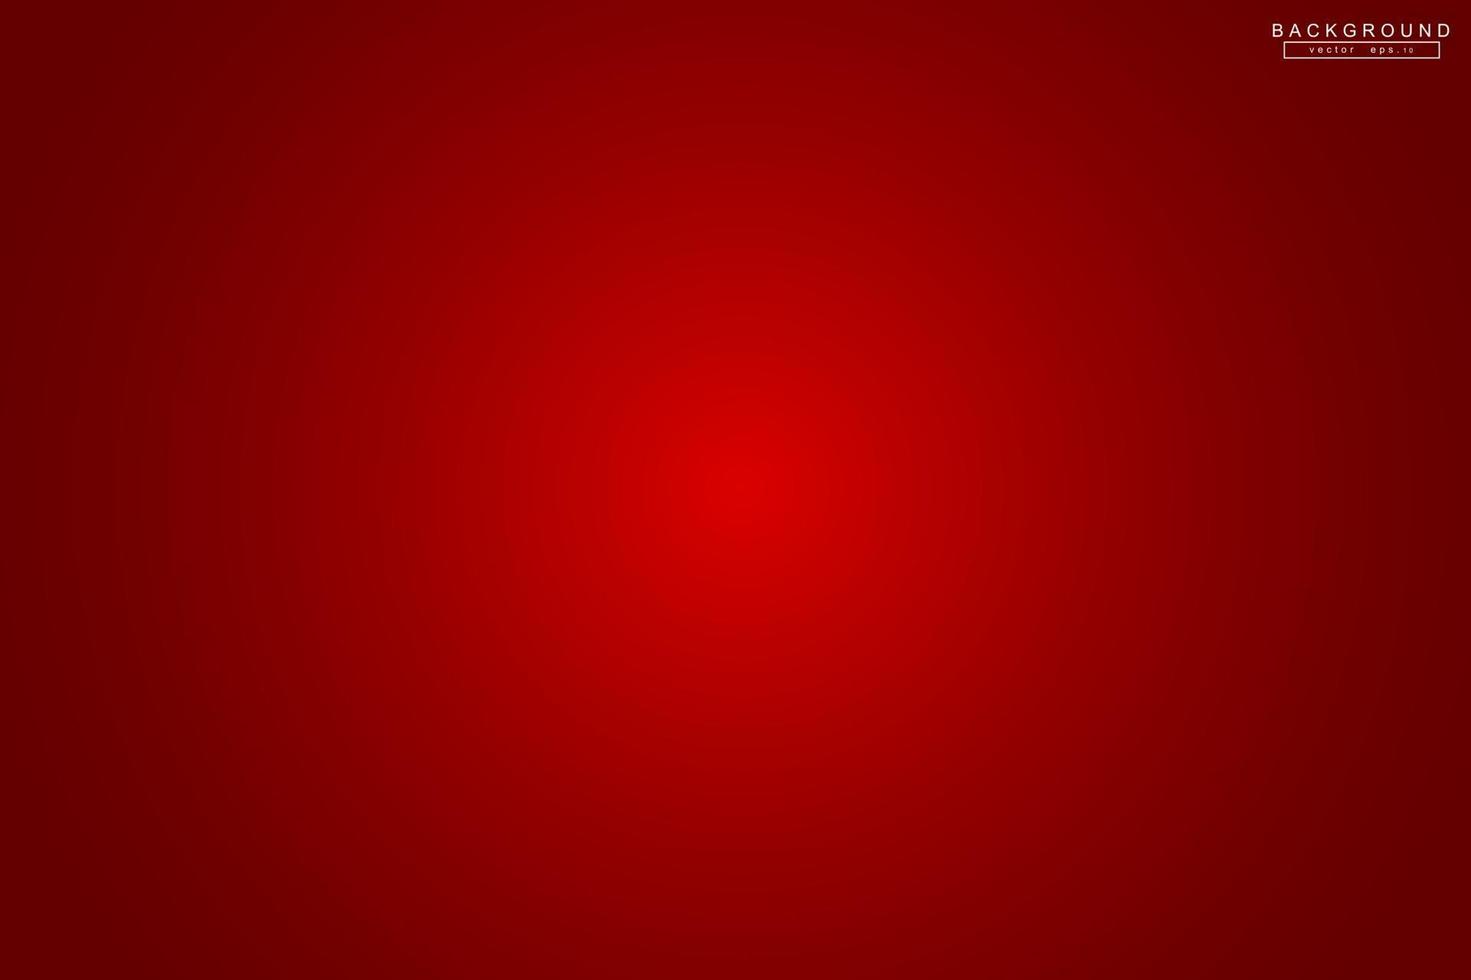 Gradient Red Background vector